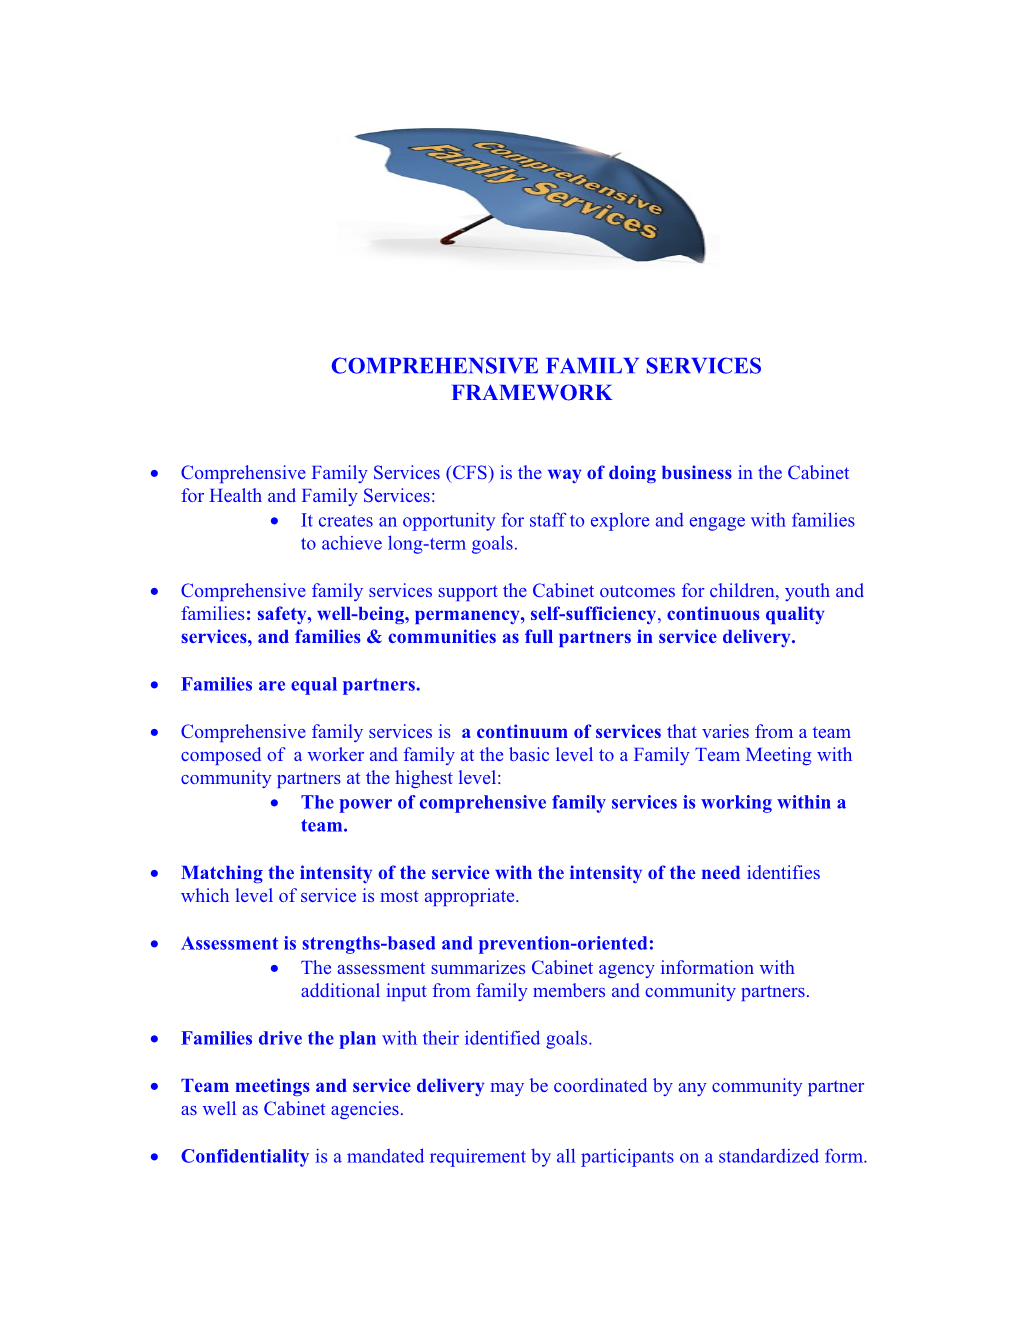 Comprehensive Family Services (CFS) Framework